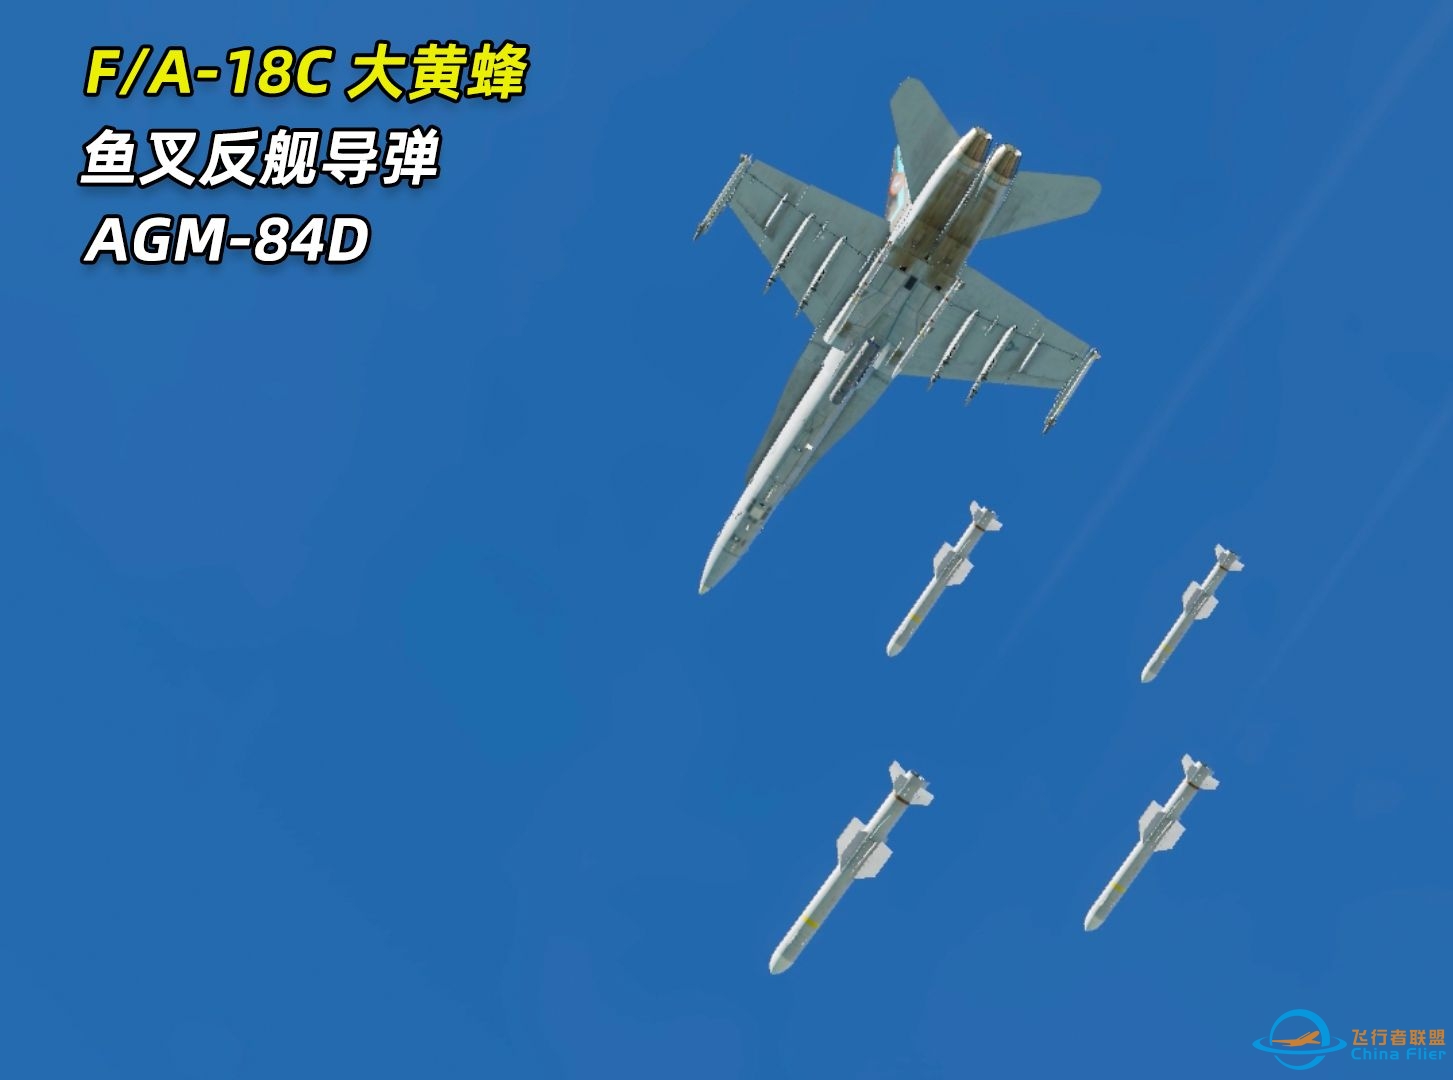 dcs world F/A18-C大黄蜂鱼叉反舰导弹 AGM84D（BOL模式）-7041 